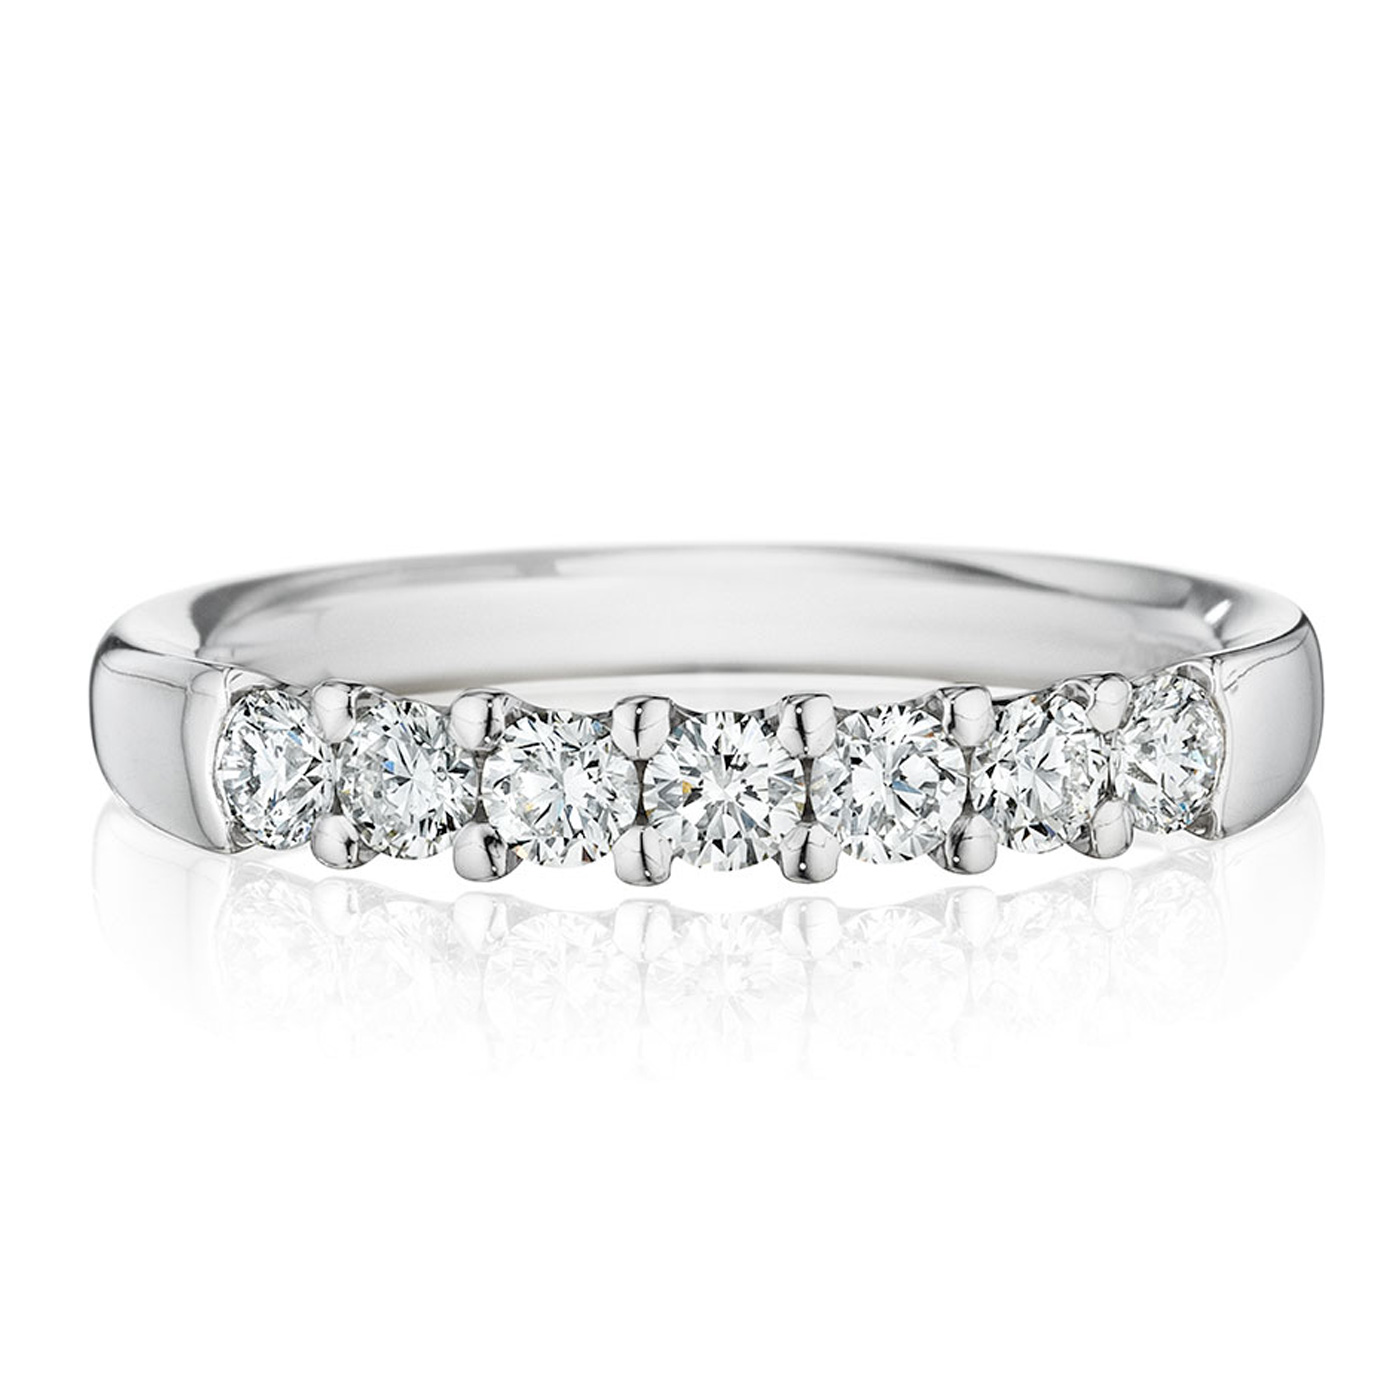 244647 Christian Bauer Platinum Diamond  Wedding Ring / Band